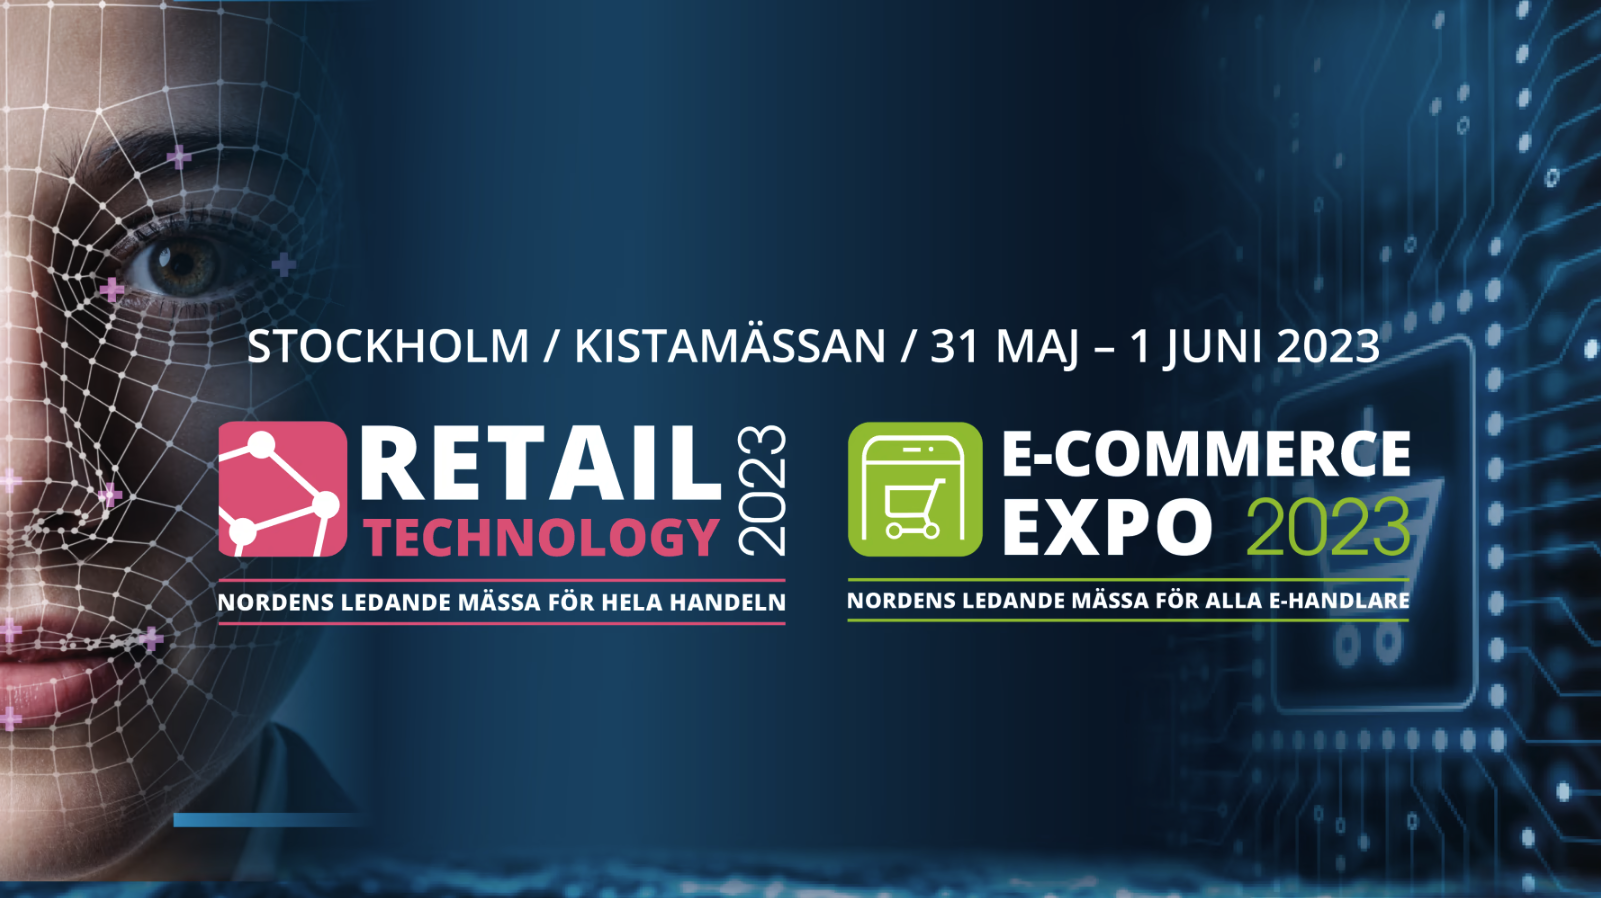 Image - Retail technology & E-commerce Expo Stockholm 2023